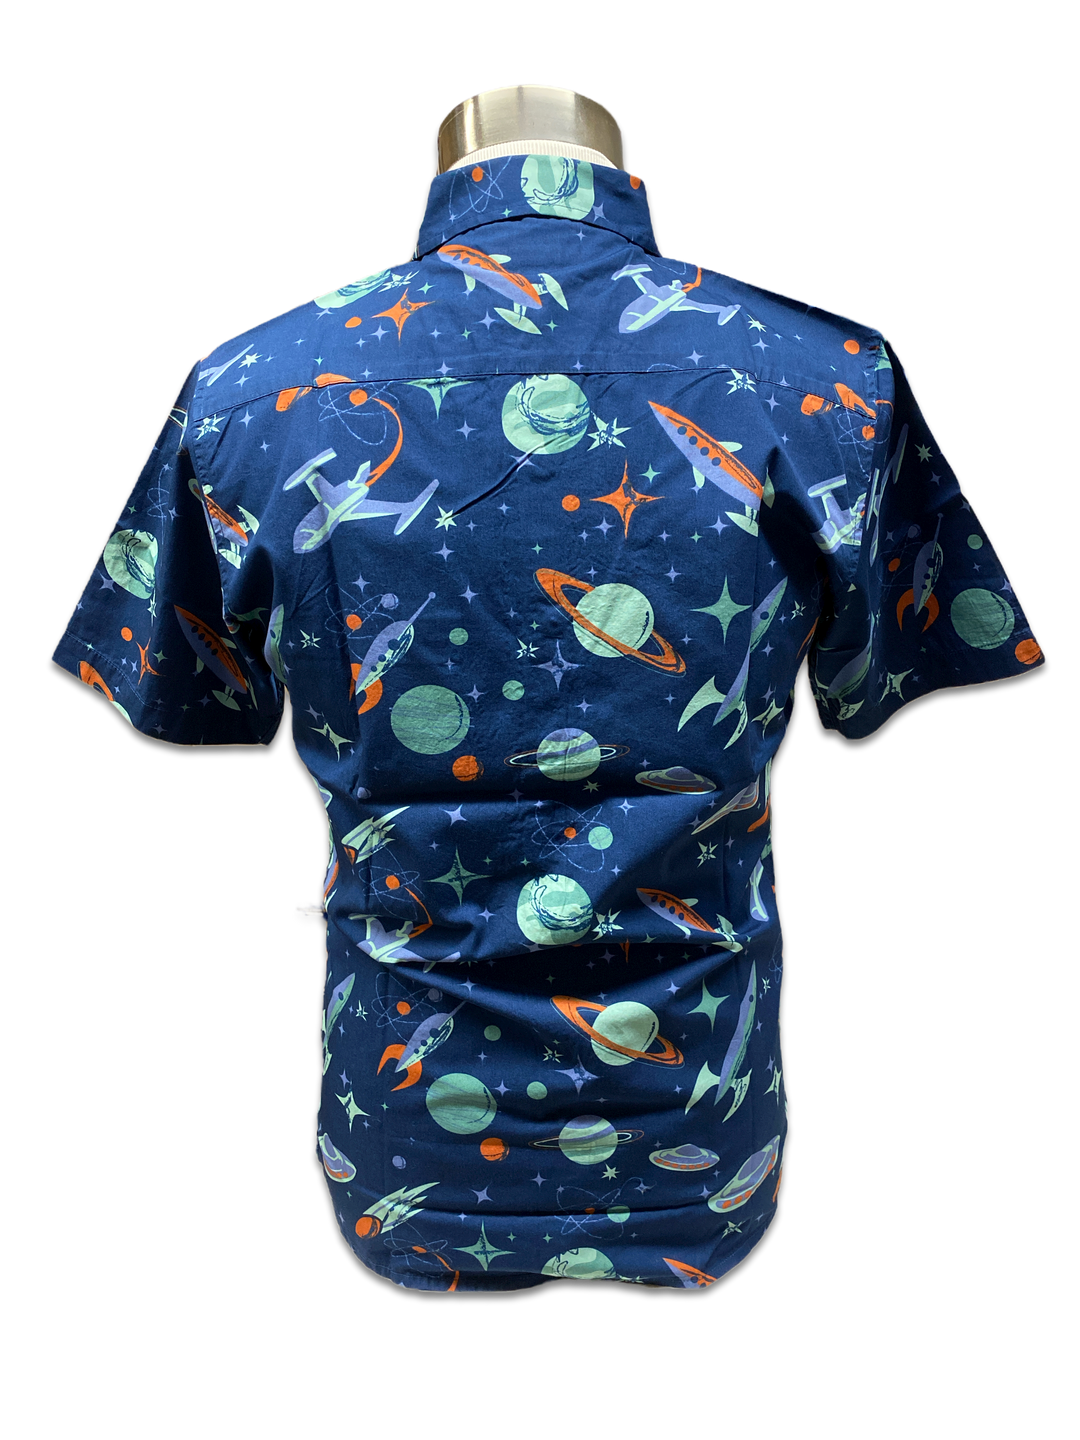 Retro Space Icons Shirt